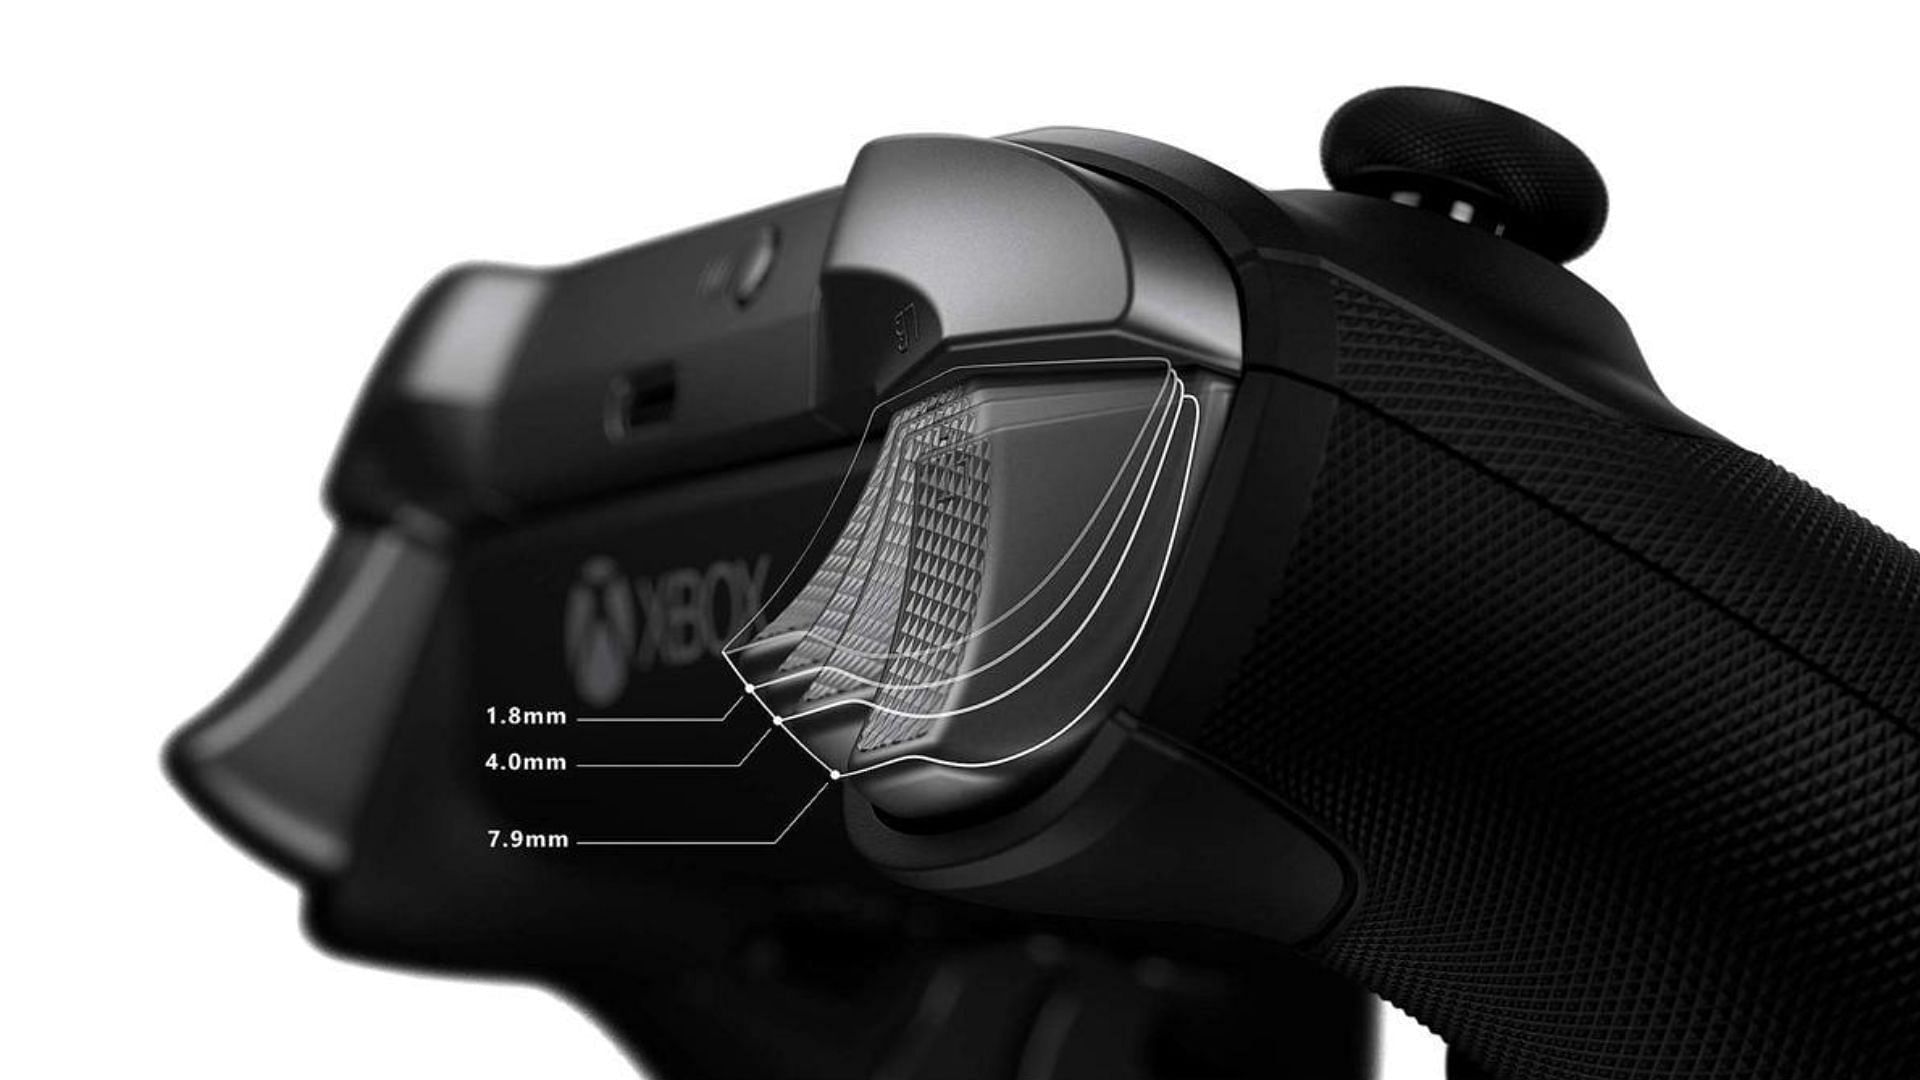 The adjustable shorter hair trigger locks on the Xbox Elite Wireless Series 2 controller (Image via Microsoft)